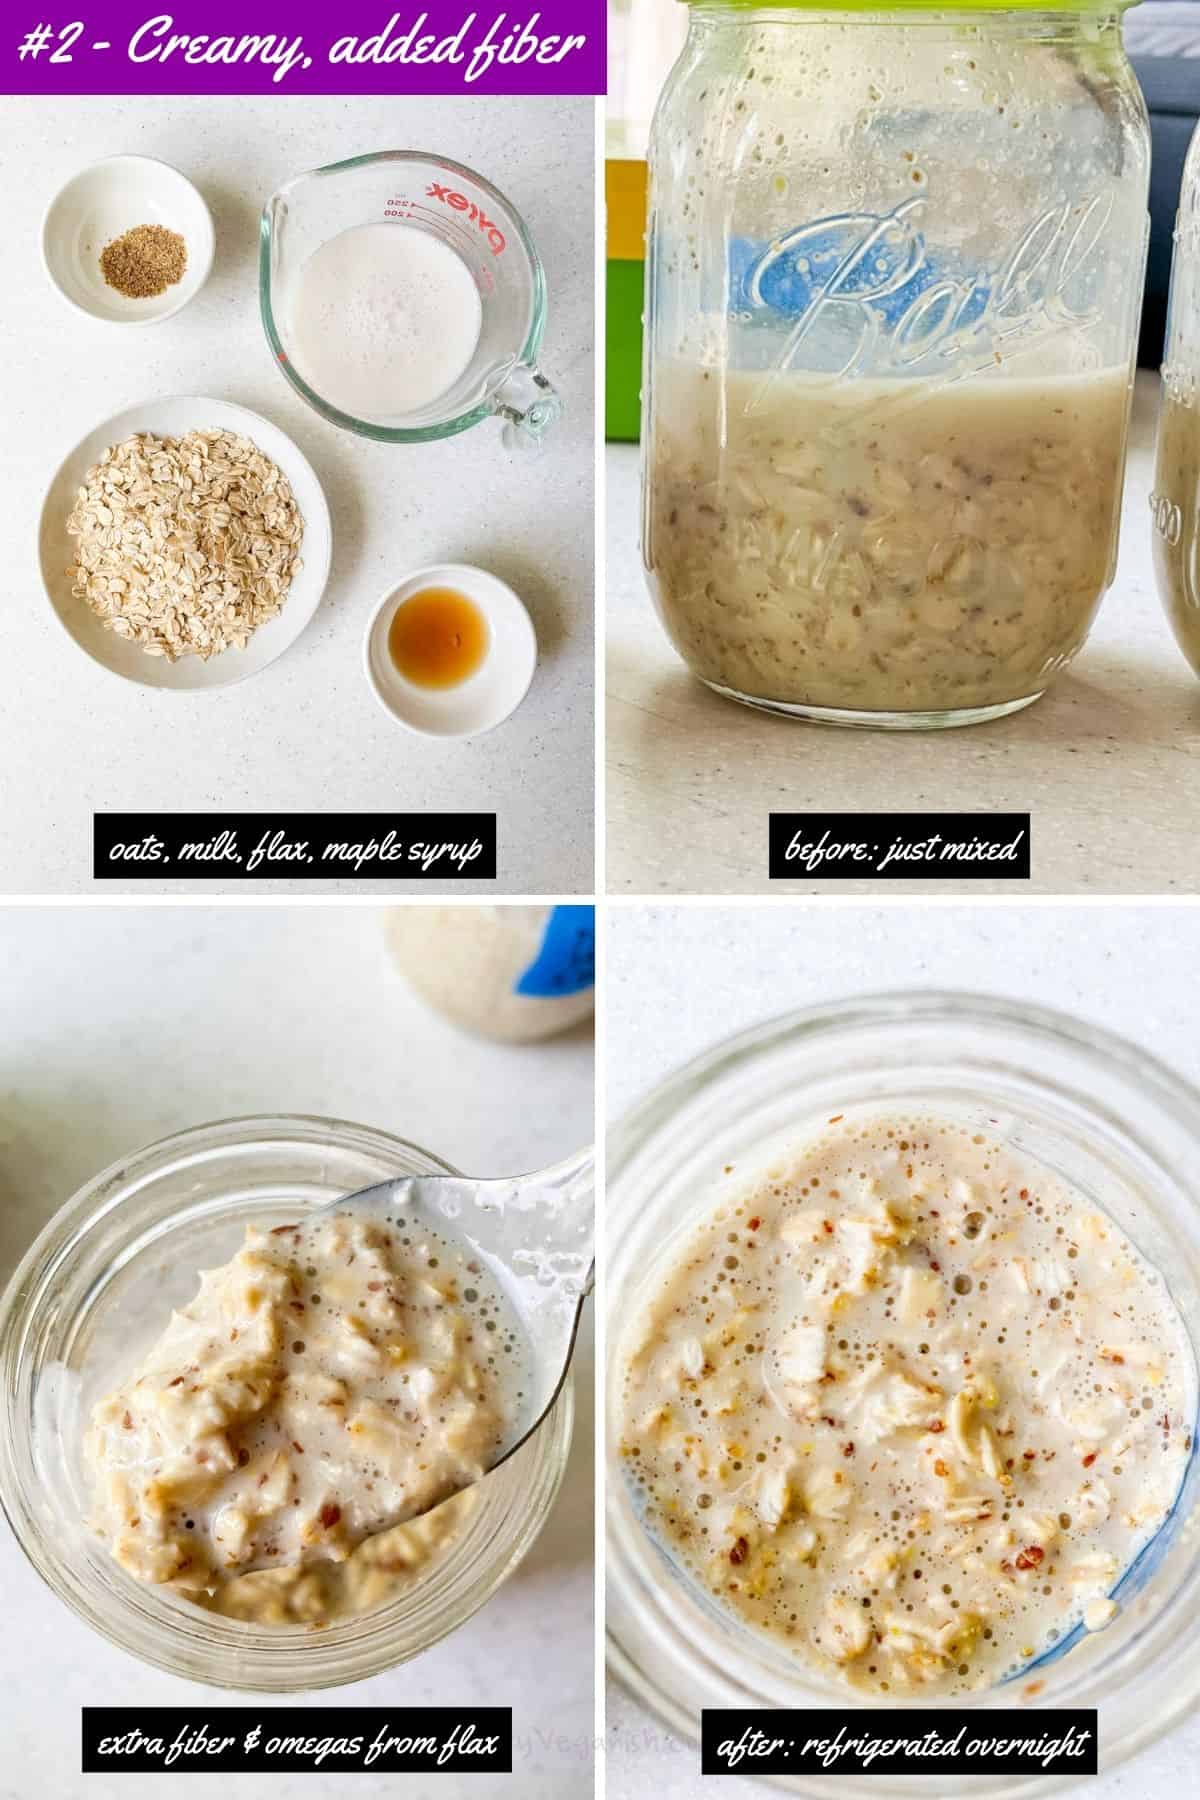 Option #2 creamy vegan overnight oats with added fiber